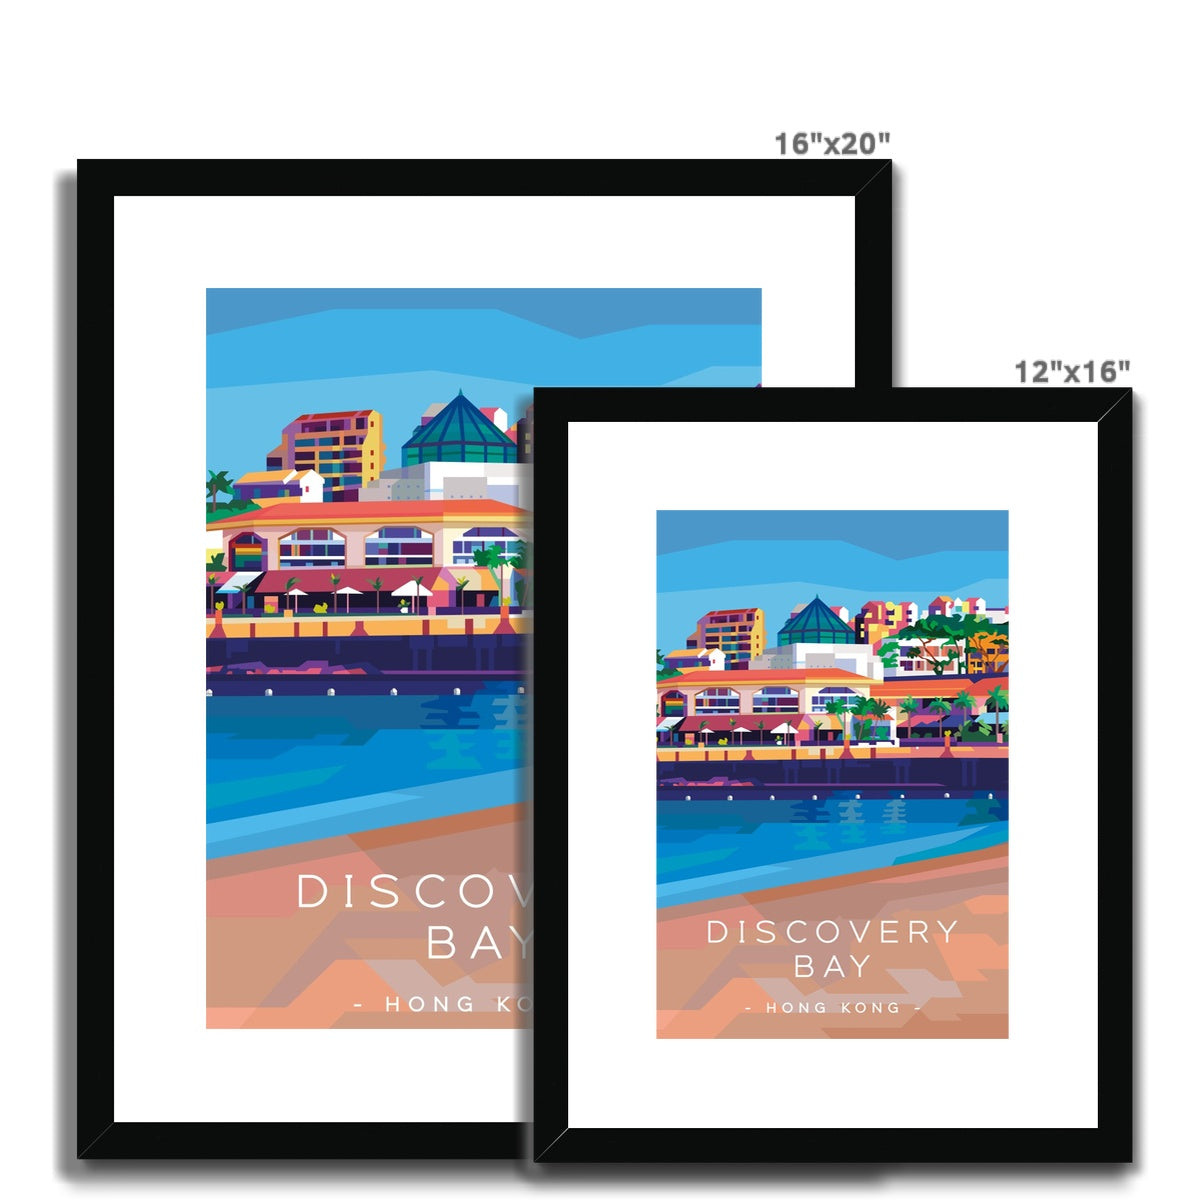 Hong Kong Travel - Discovery Bay Framed & Mounted Print